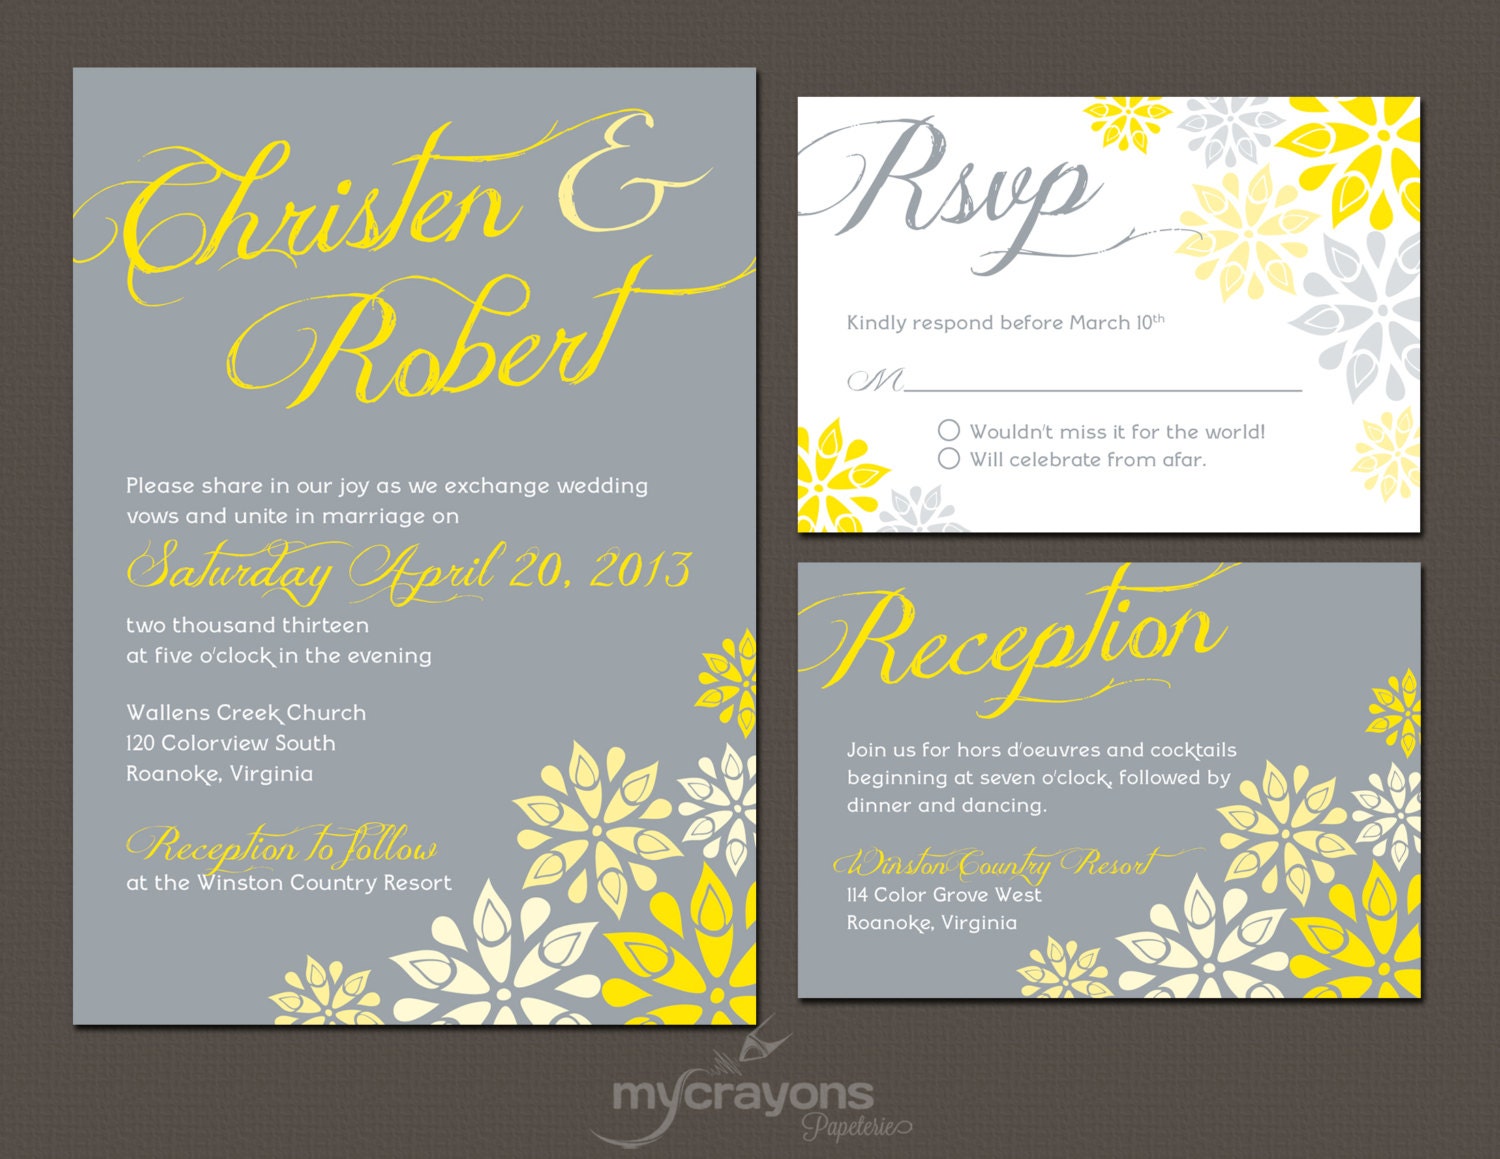 subtle splash of color is nice | Yellow wedding invitations, Yellow